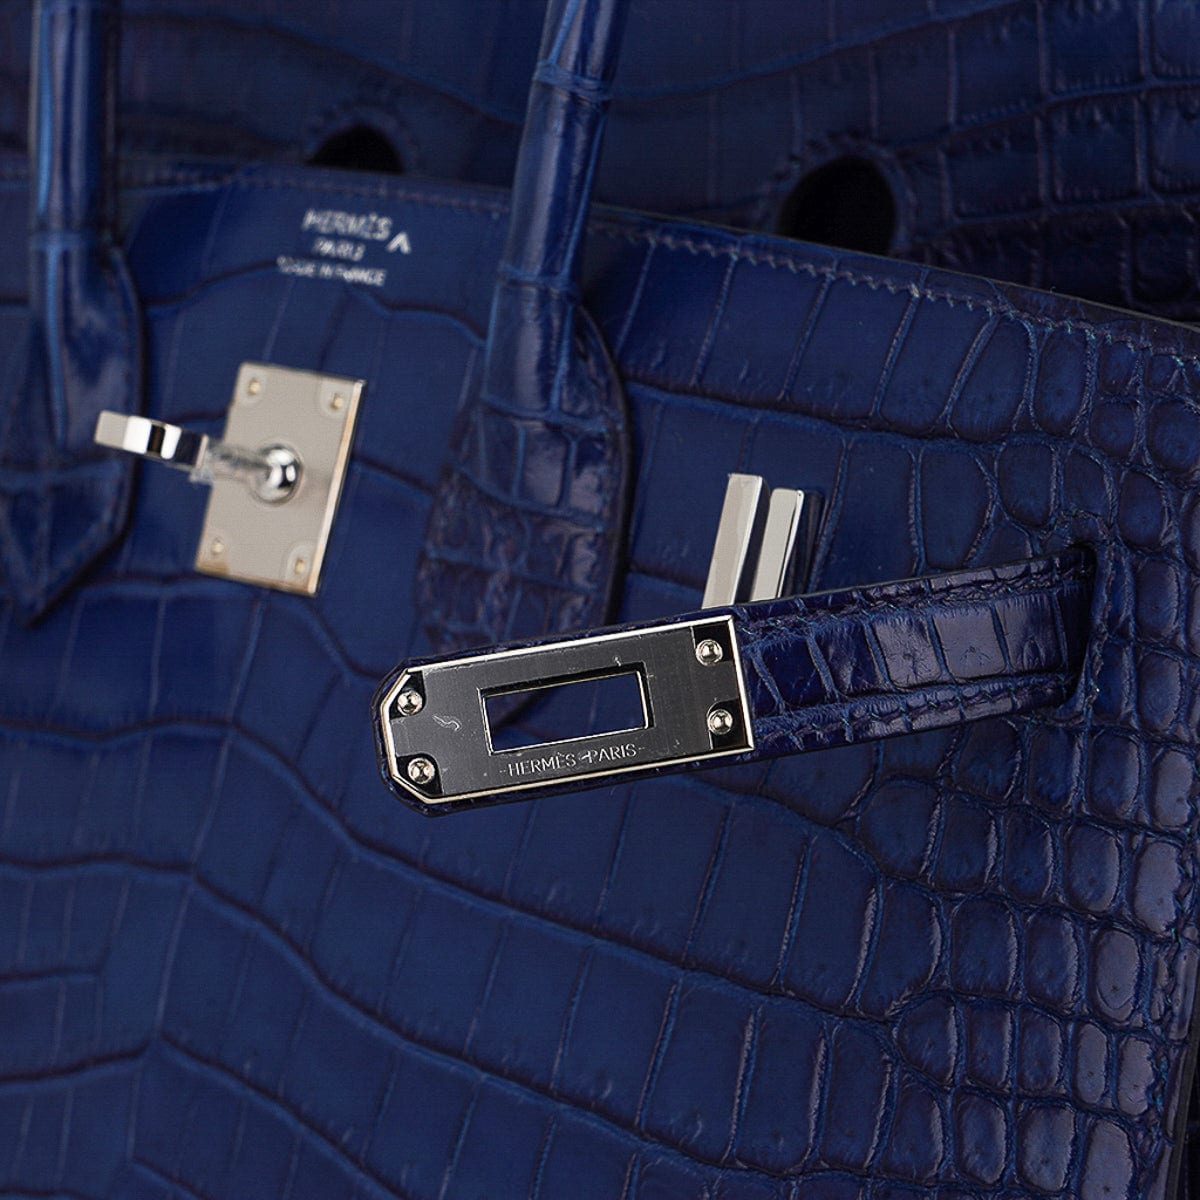 Hermes Limited Edition Birkin 25 Sellier Bag in Indigo Aizome Porosus Crocodile with Palladium Hardware